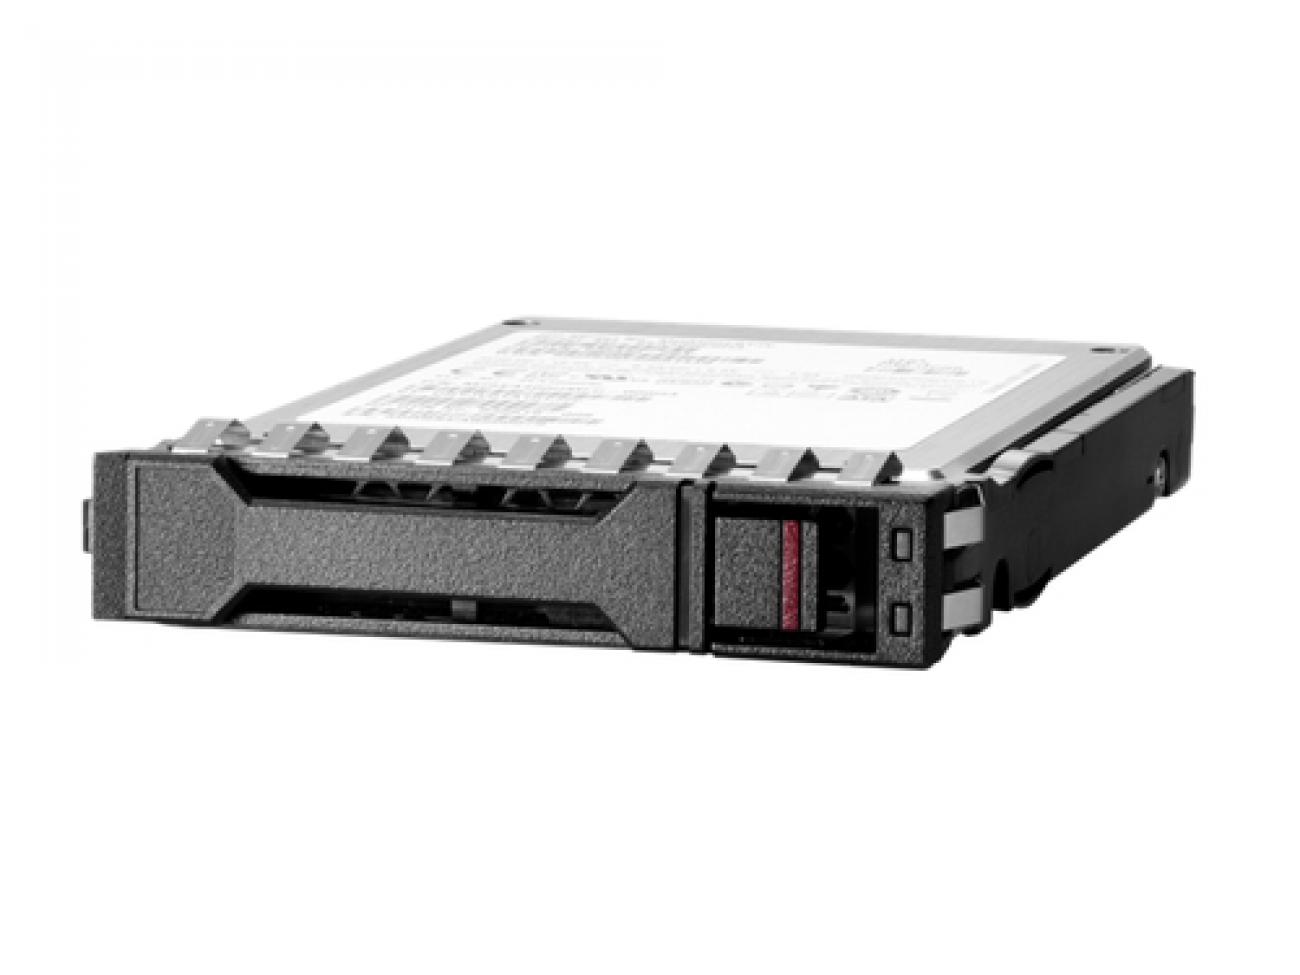 HPE HDD SERVER 600GB SAS 12G MC 10K SFF